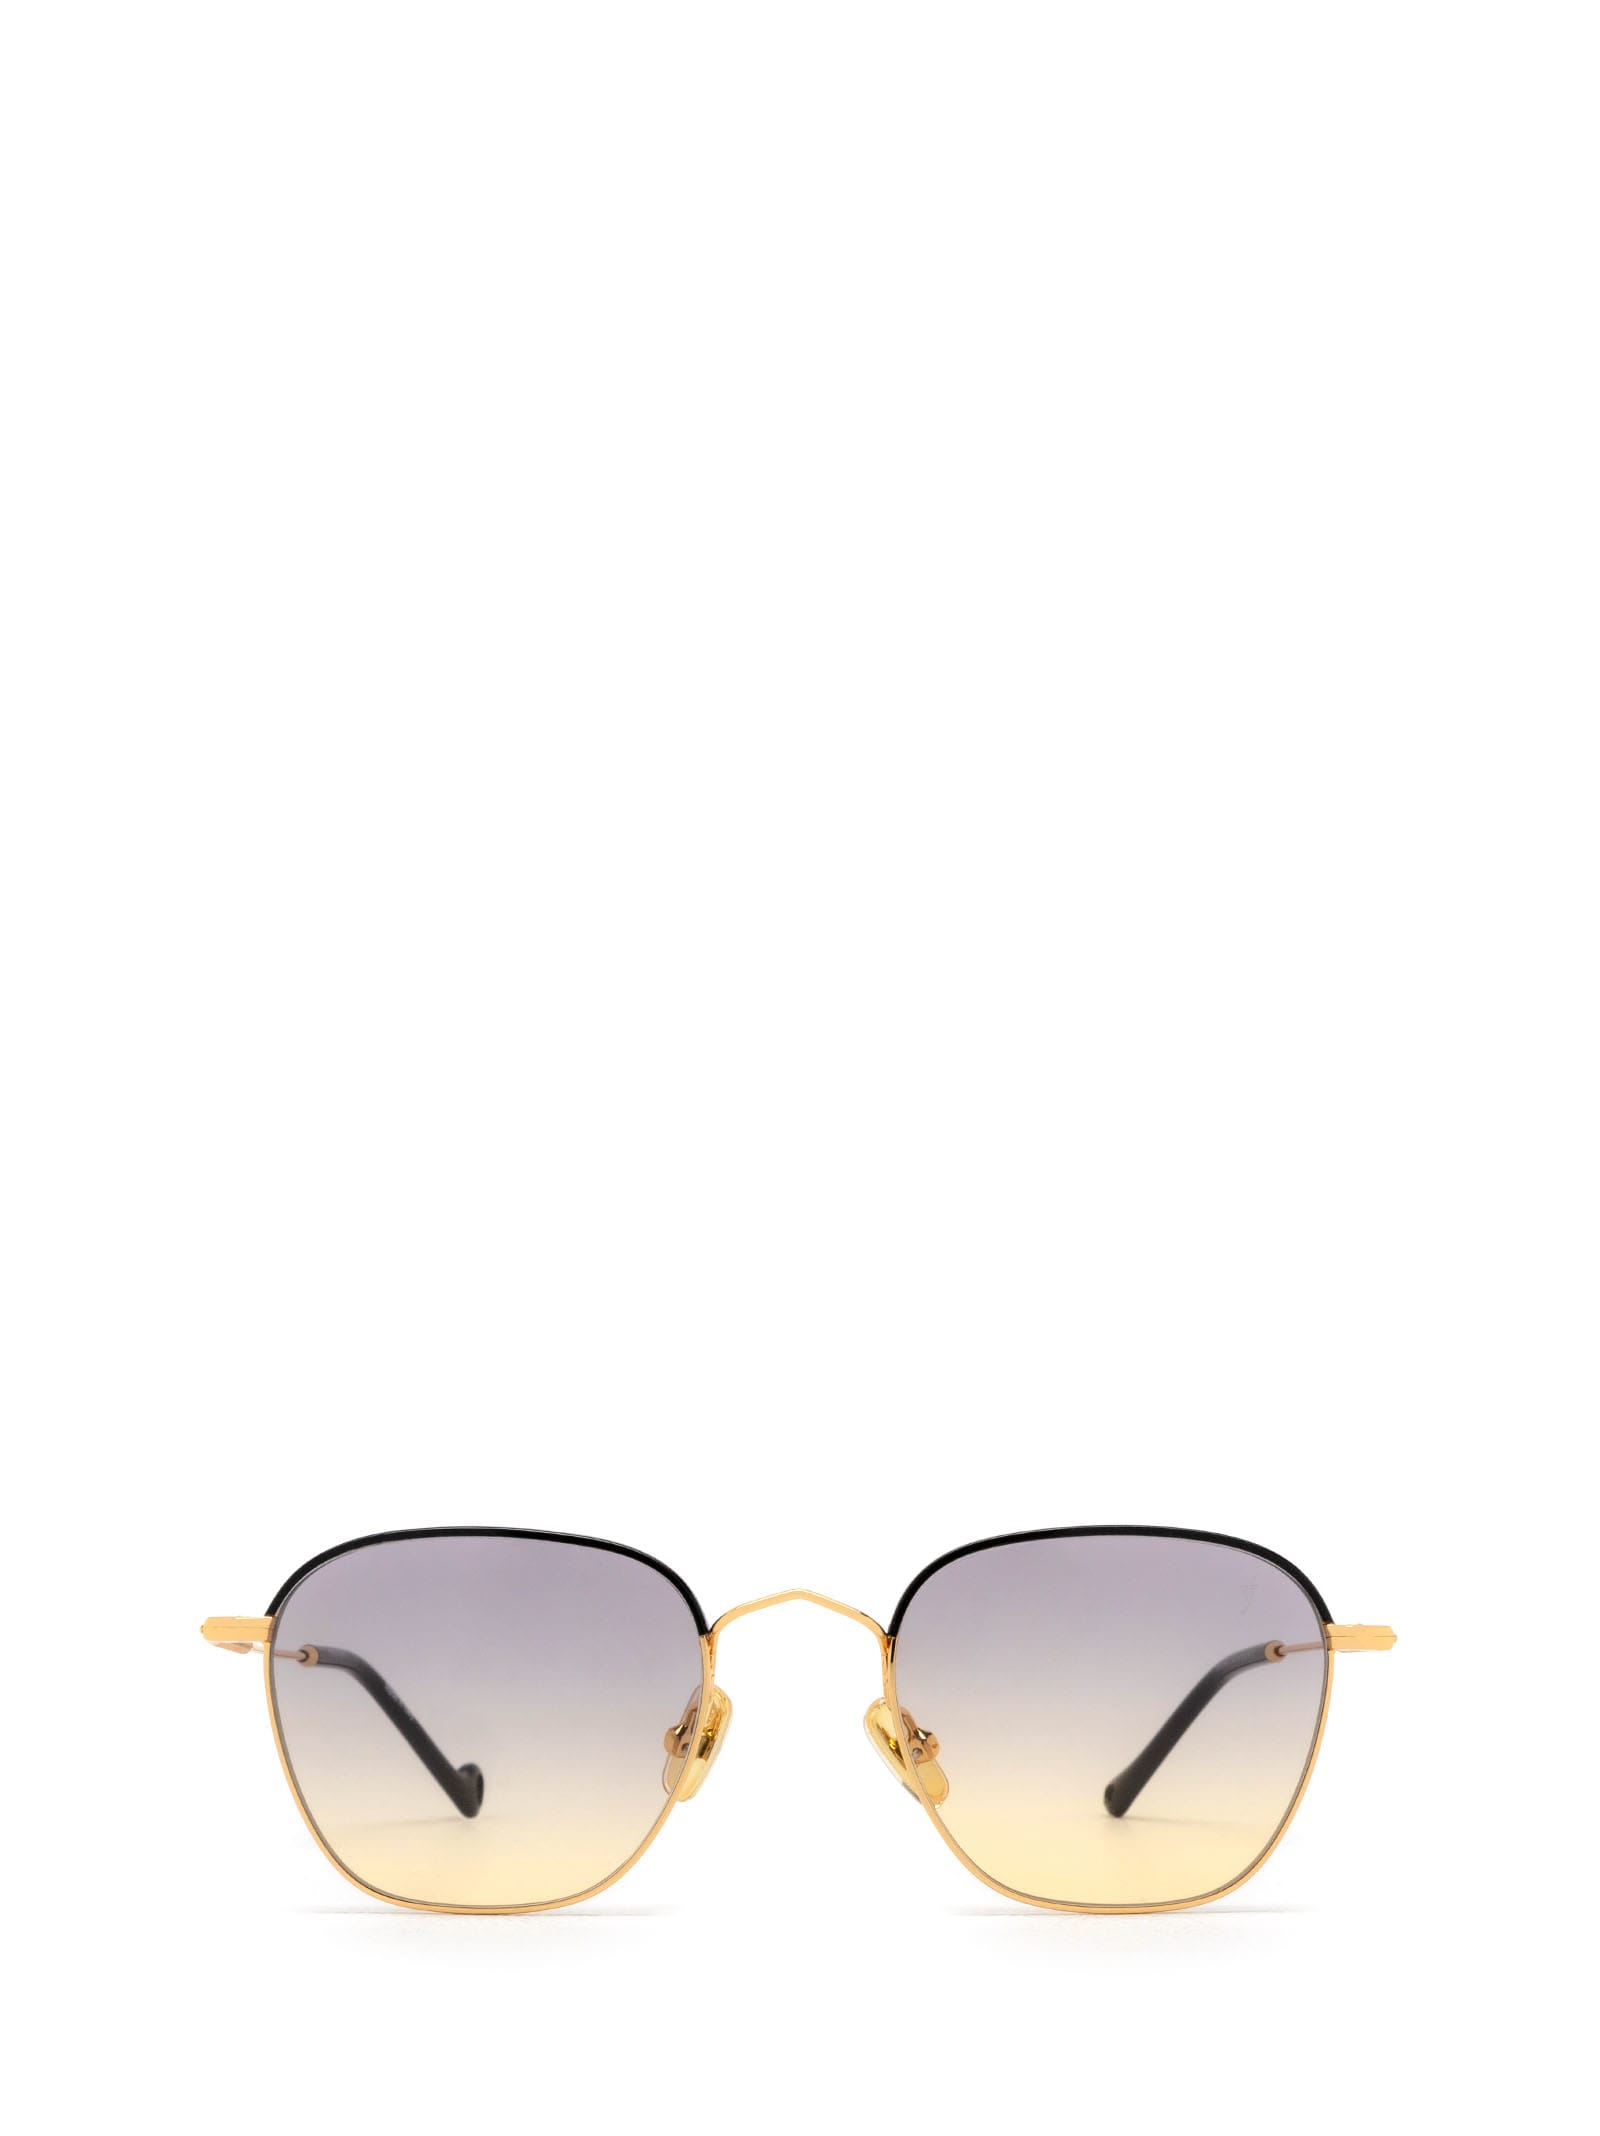 Atacama Black Sunglasses